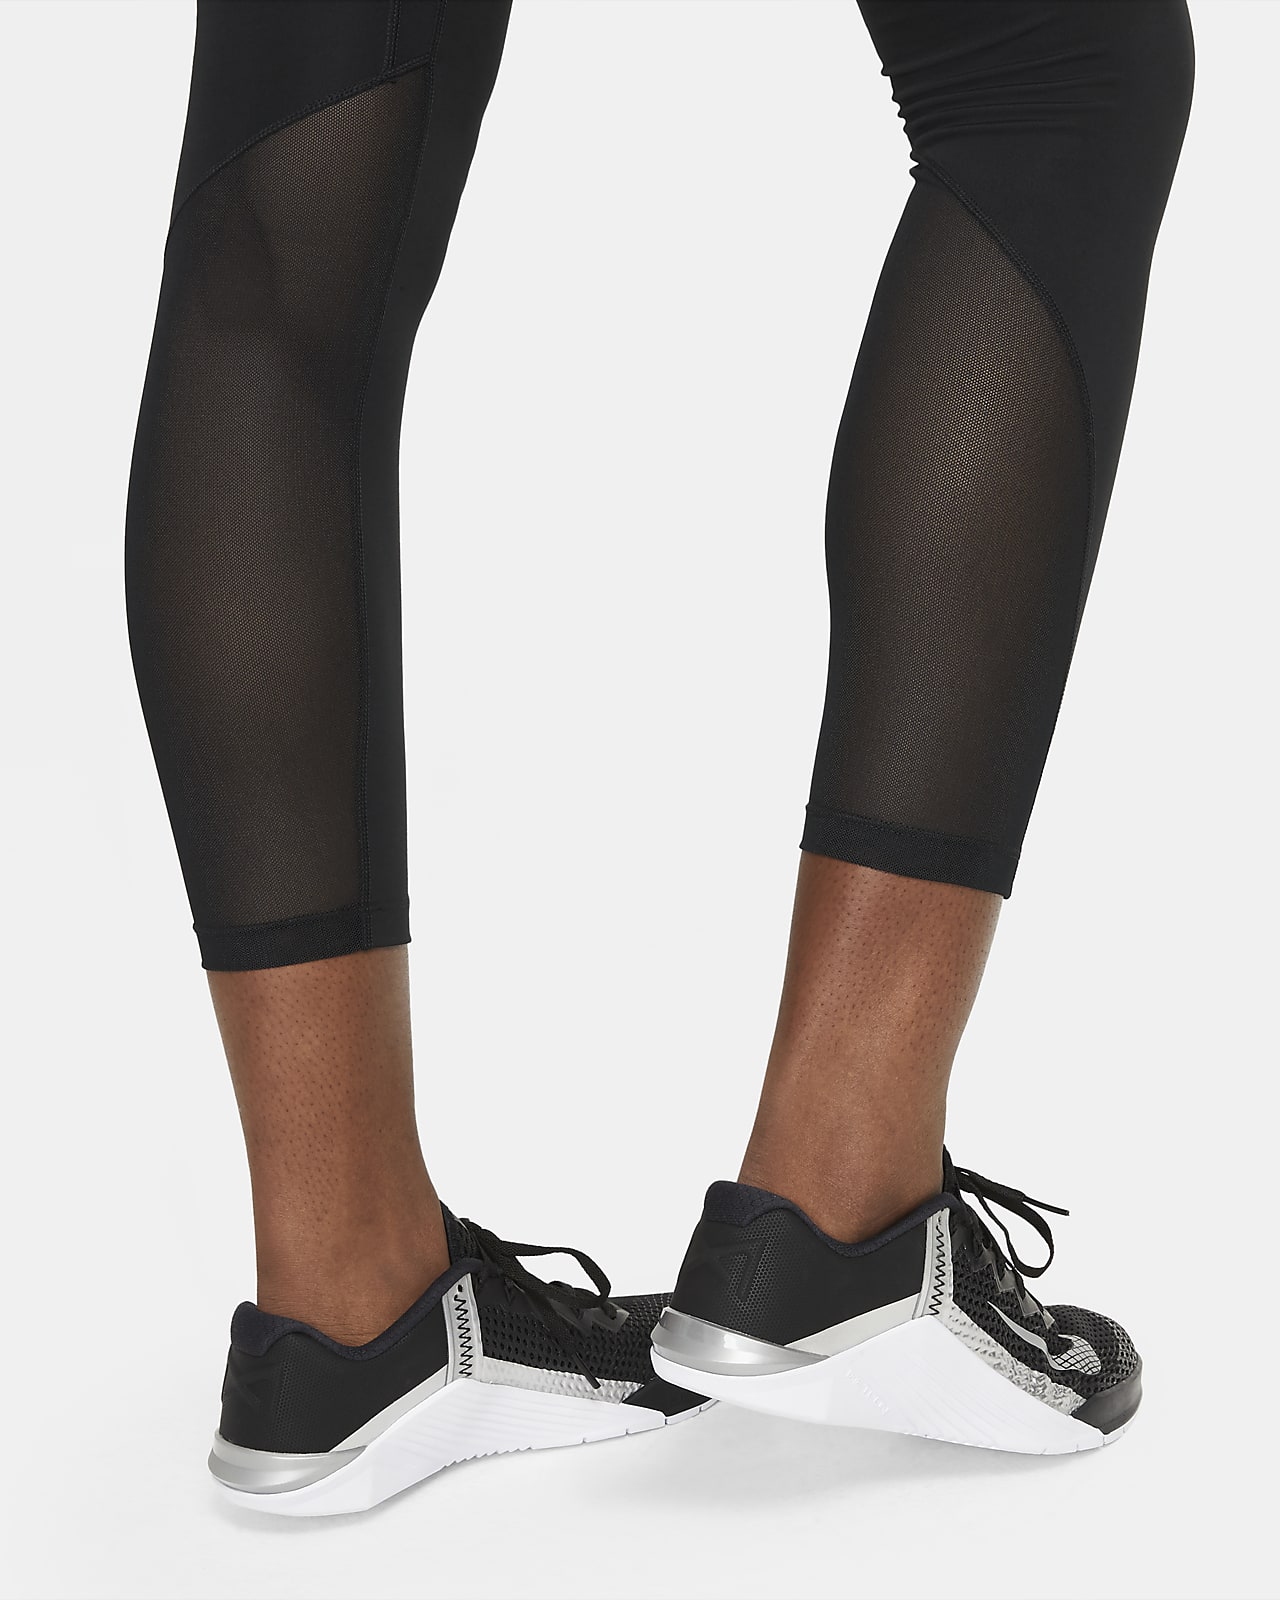 Nike Women's Tight Fit Mid Rise 7/8 Length Leggings Size Large